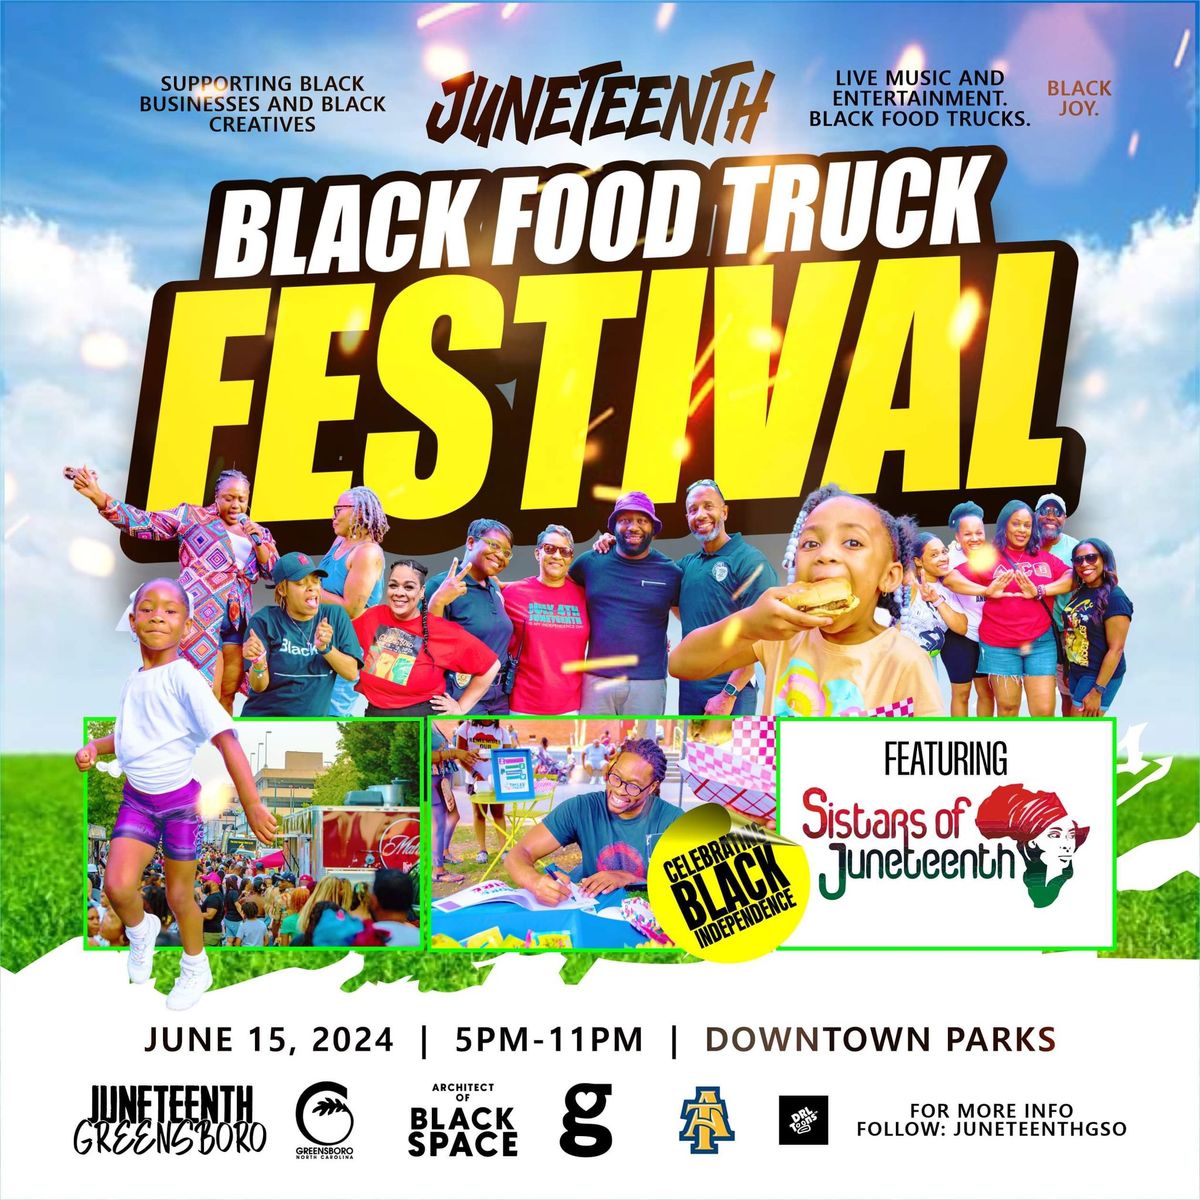 Juneteenth Black Food Truck Festival featuring Sistars